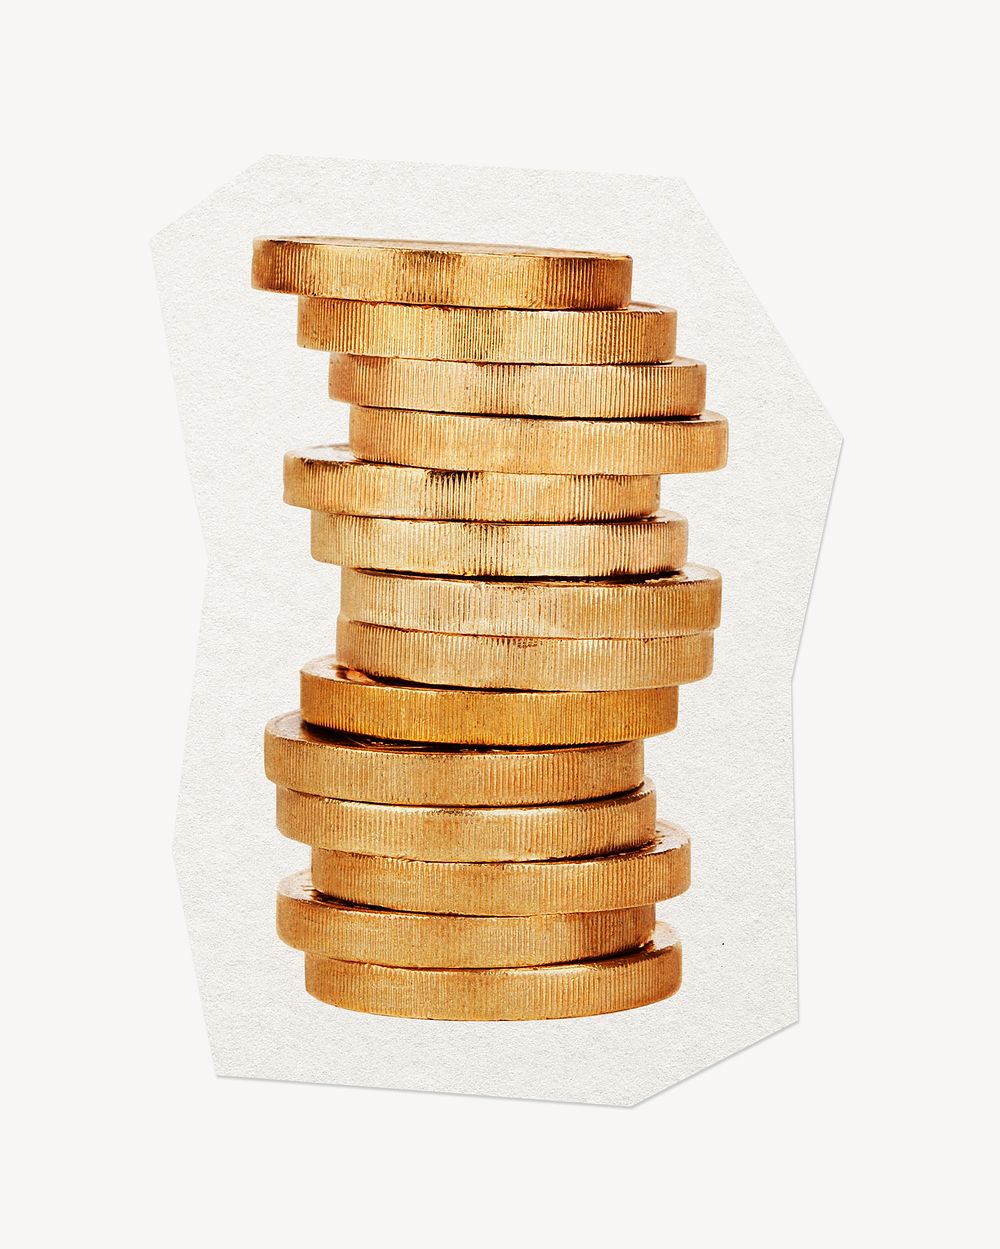 Wealth, gold coins clipart sticker, paper craft collage element